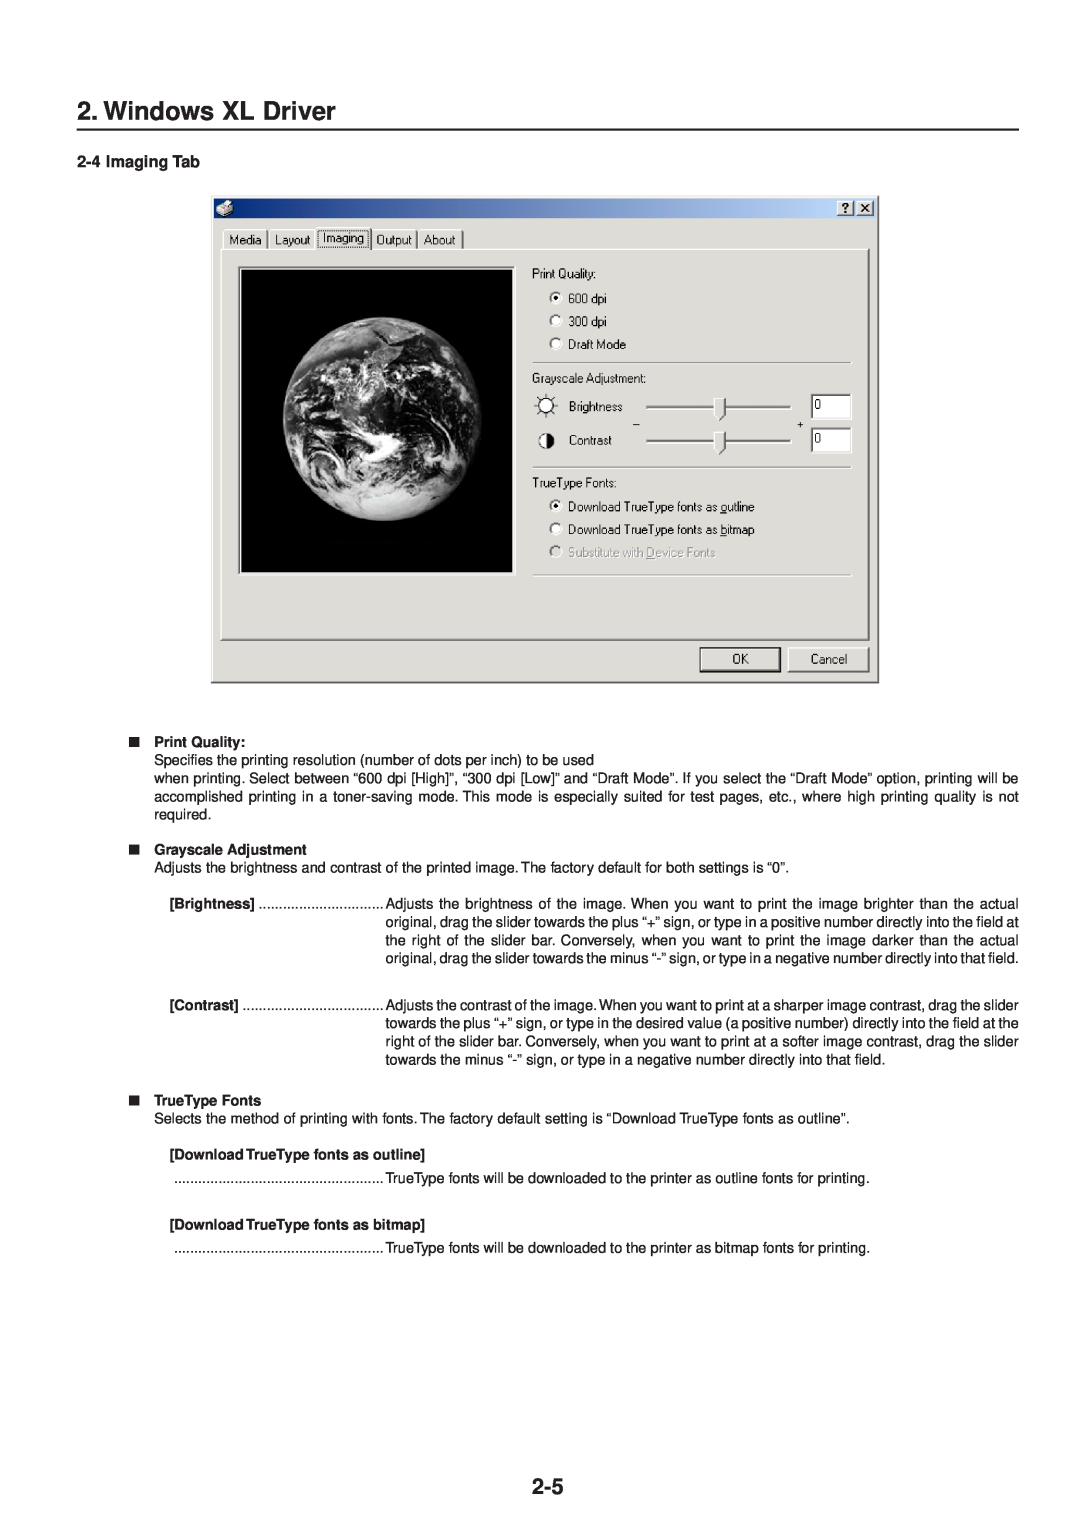 IBM Printing System manual Windows XL Driver, Imaging Tab, Print Quality, Grayscale Adjustment, TrueType Fonts 